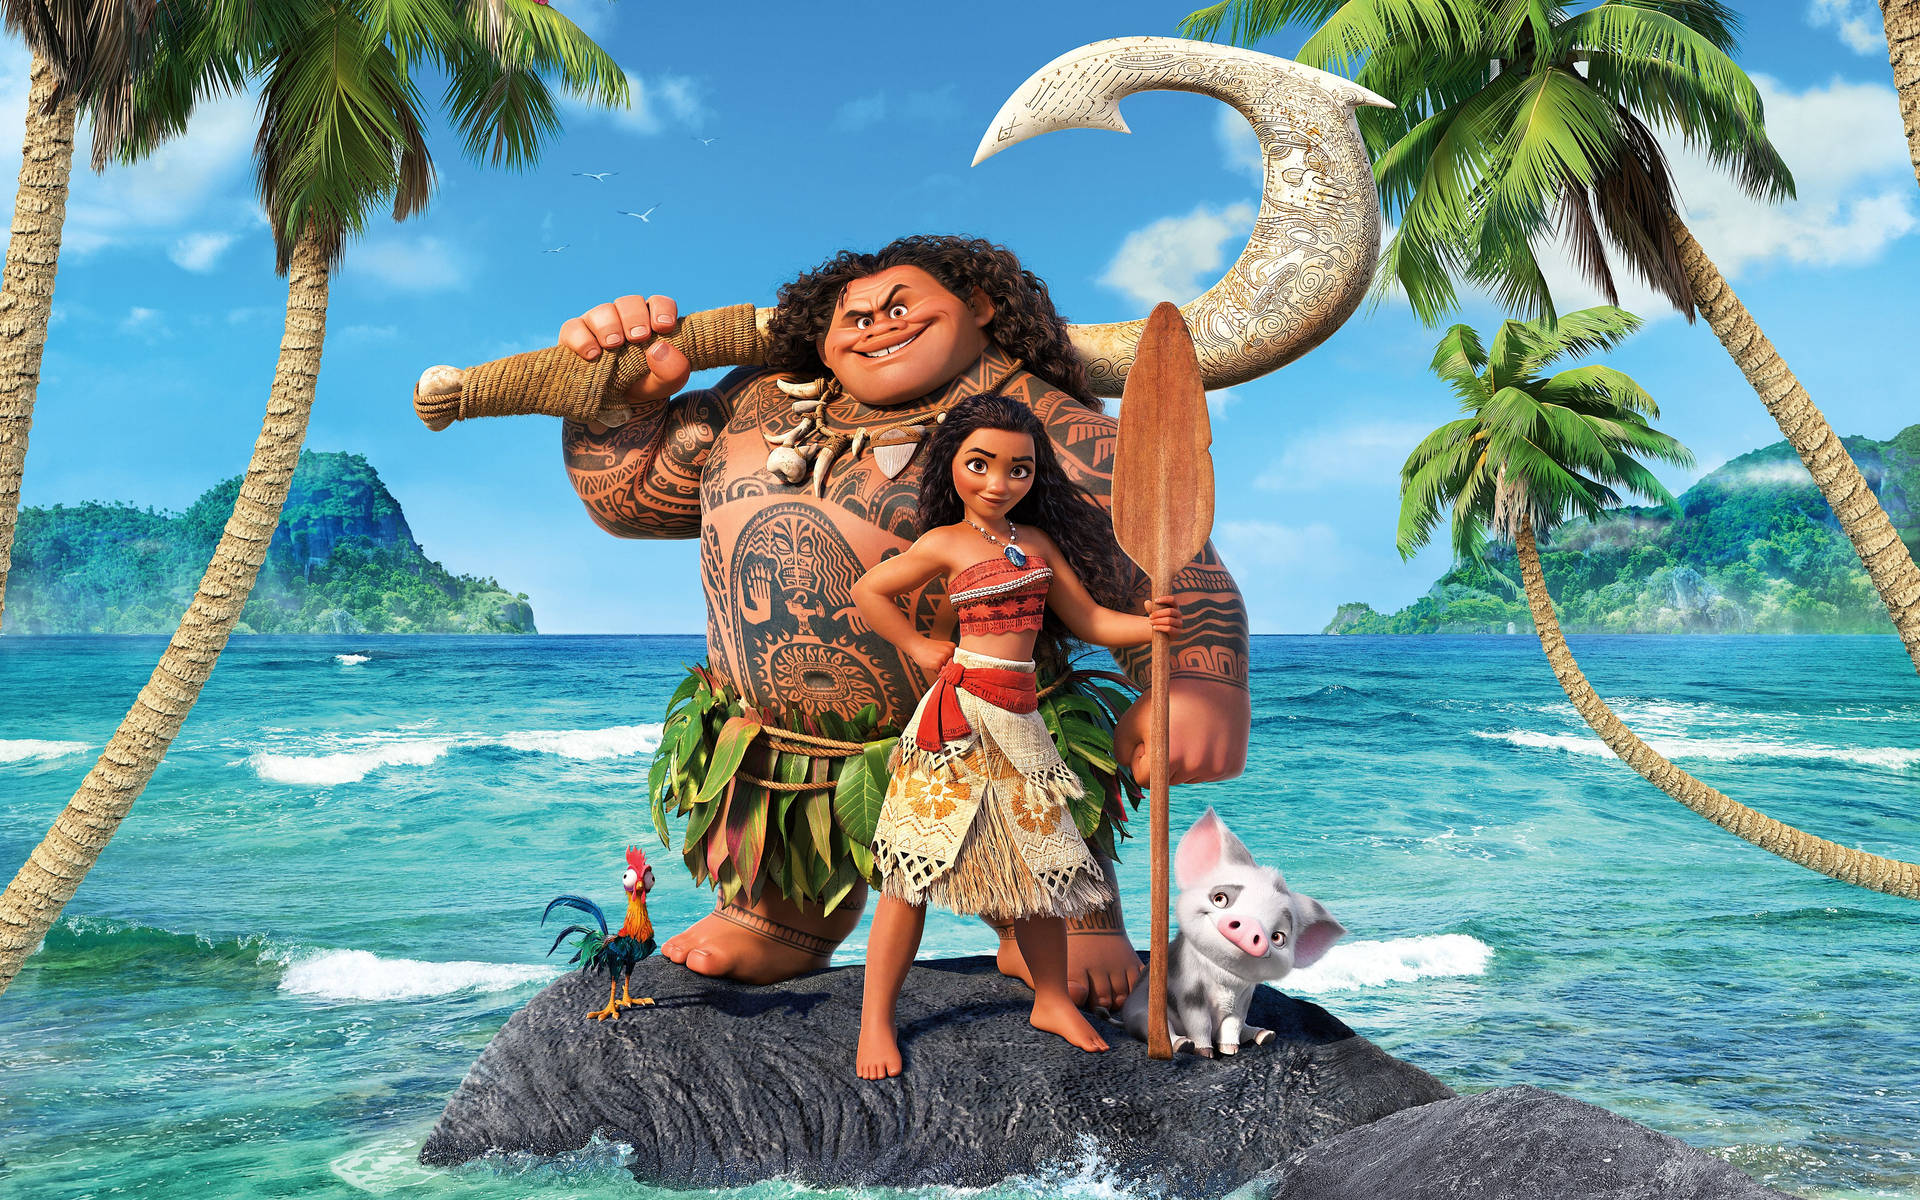 Moanae Maui Disney 4k Ultra Wide Poster. Papel de Parede